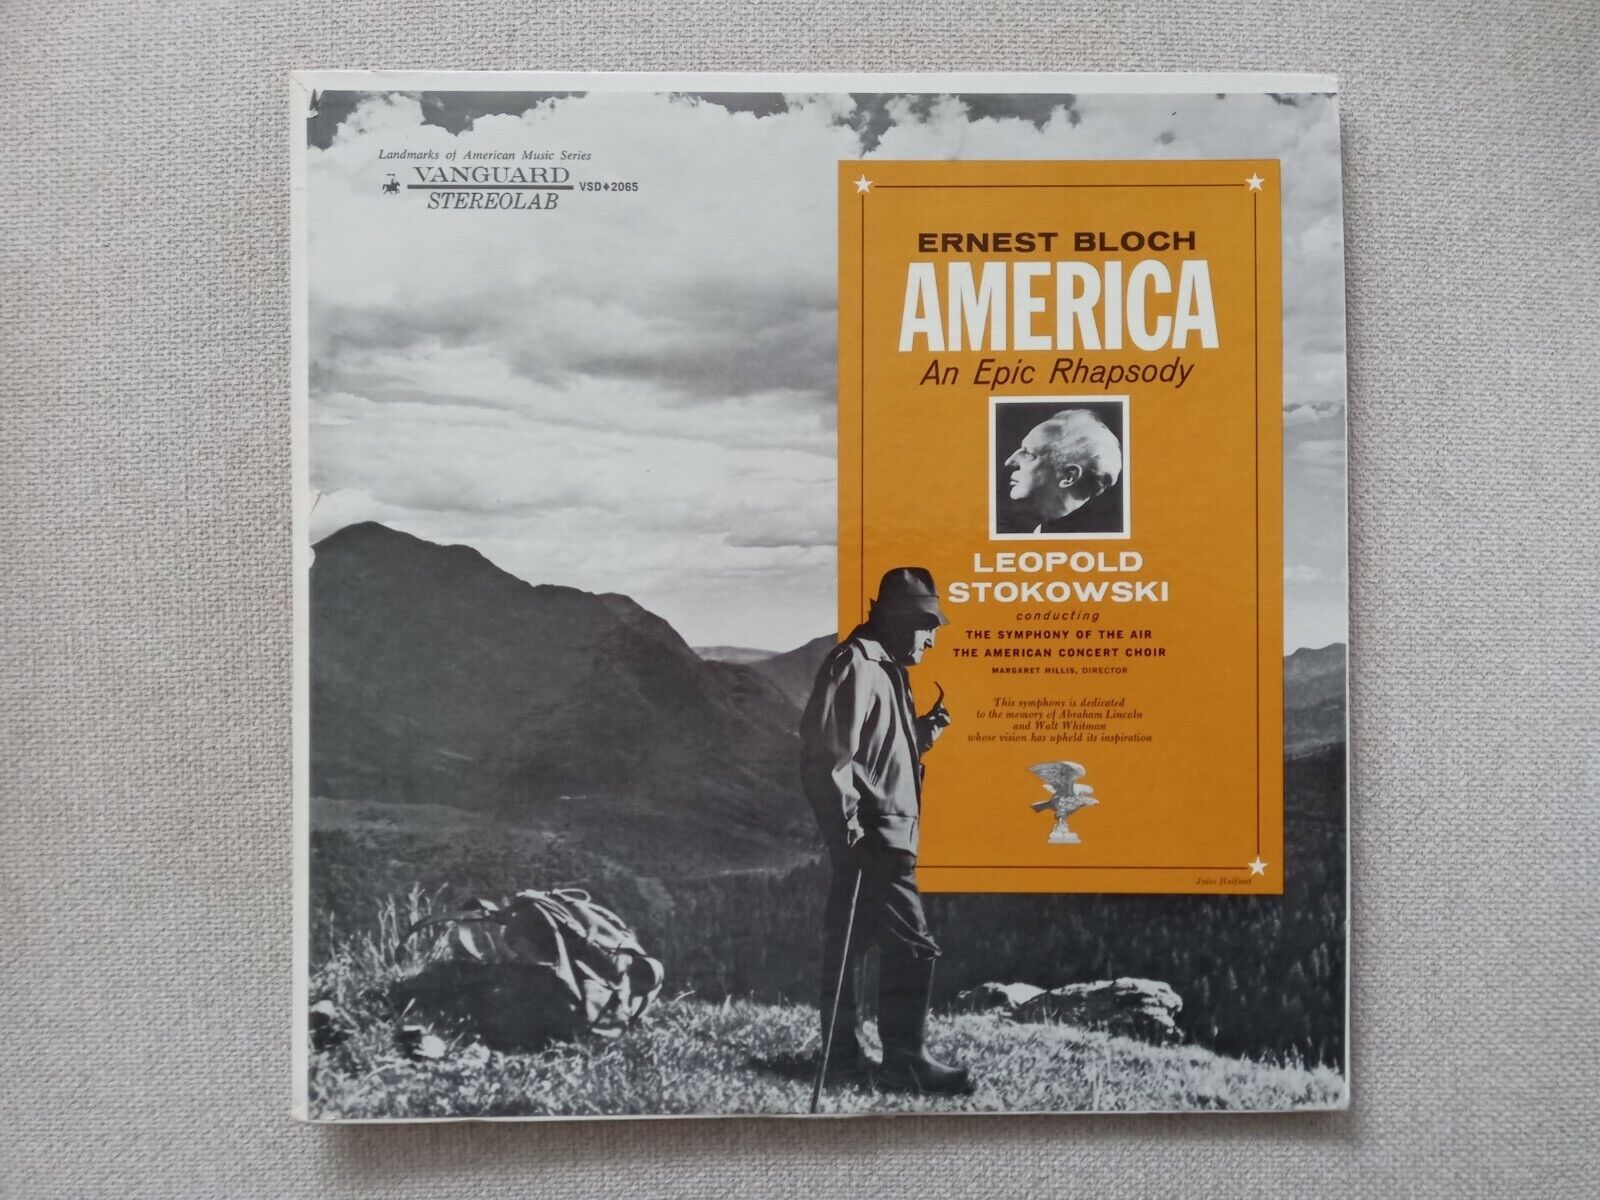 ERNEST BLOCH America an Epic Rhapsody VANGUARD VSD-2065 (1st Press, Stereo) LP